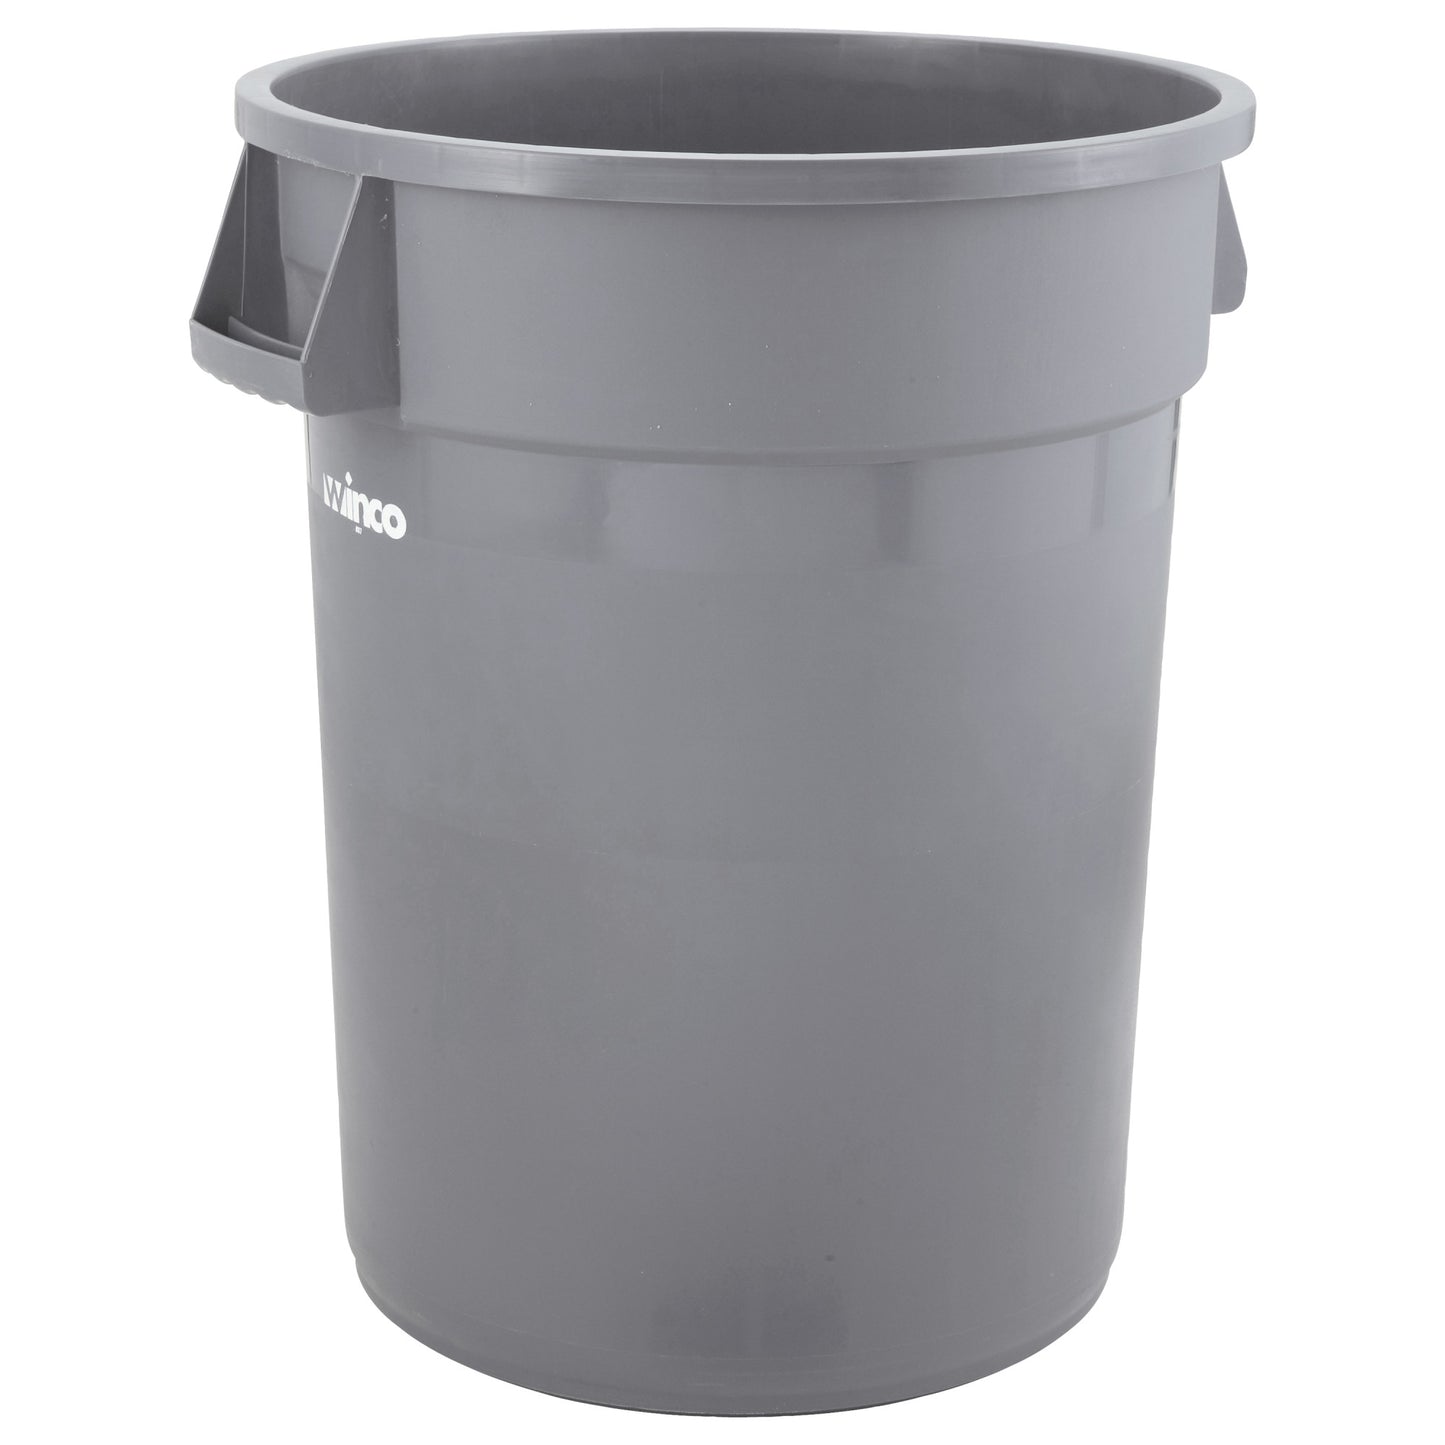 Heavy-Duty Round Trash Can - Gray, 10 Gallon